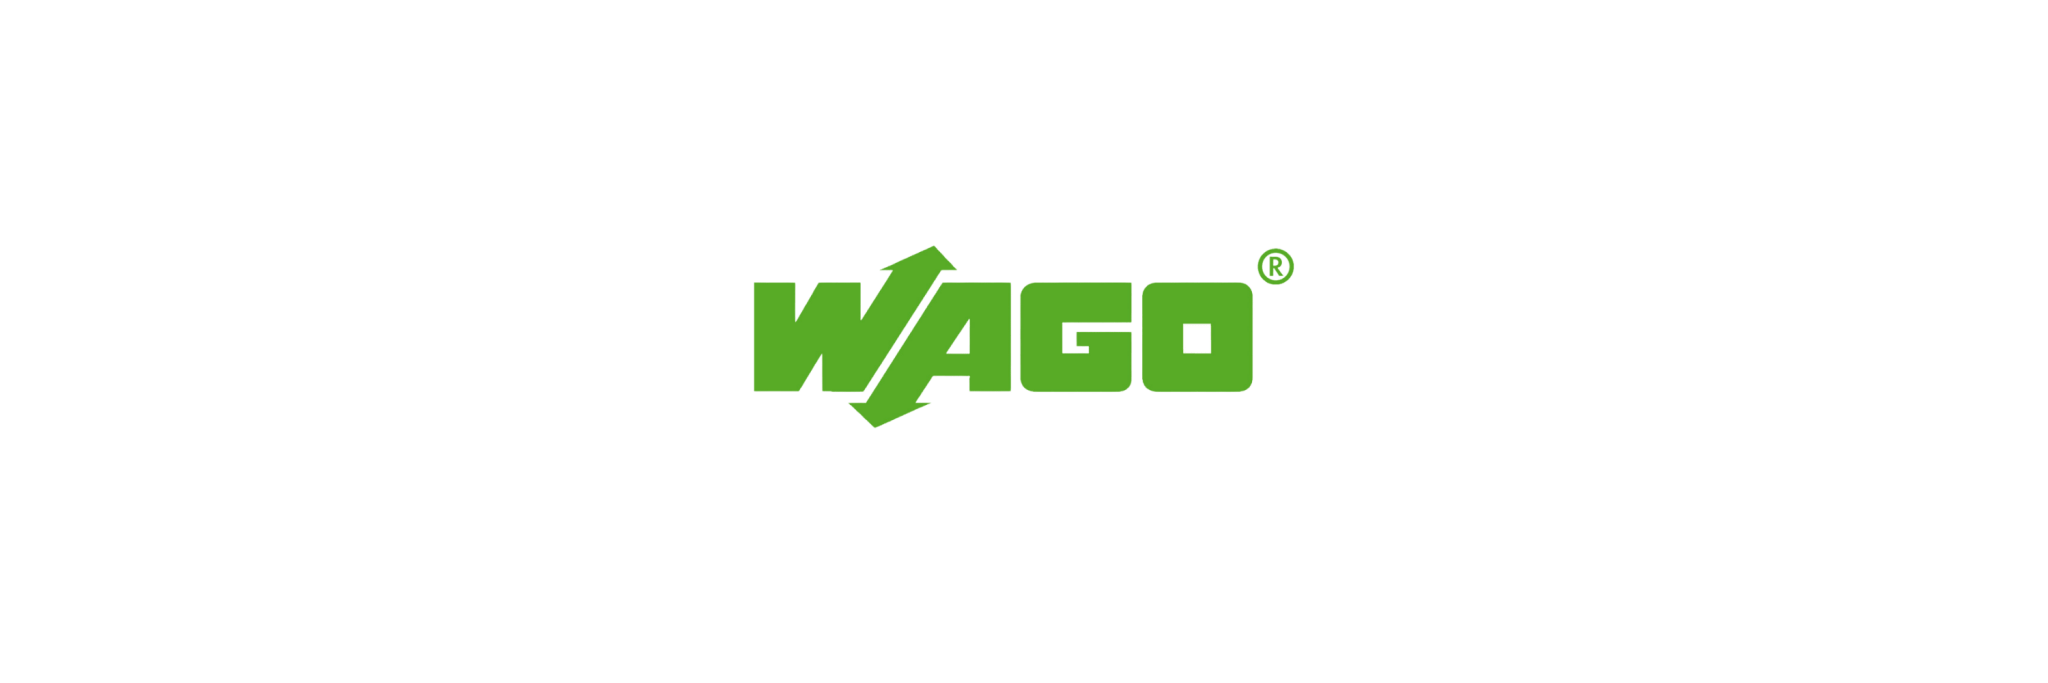 WAGO - Klenk Maschinenhandel